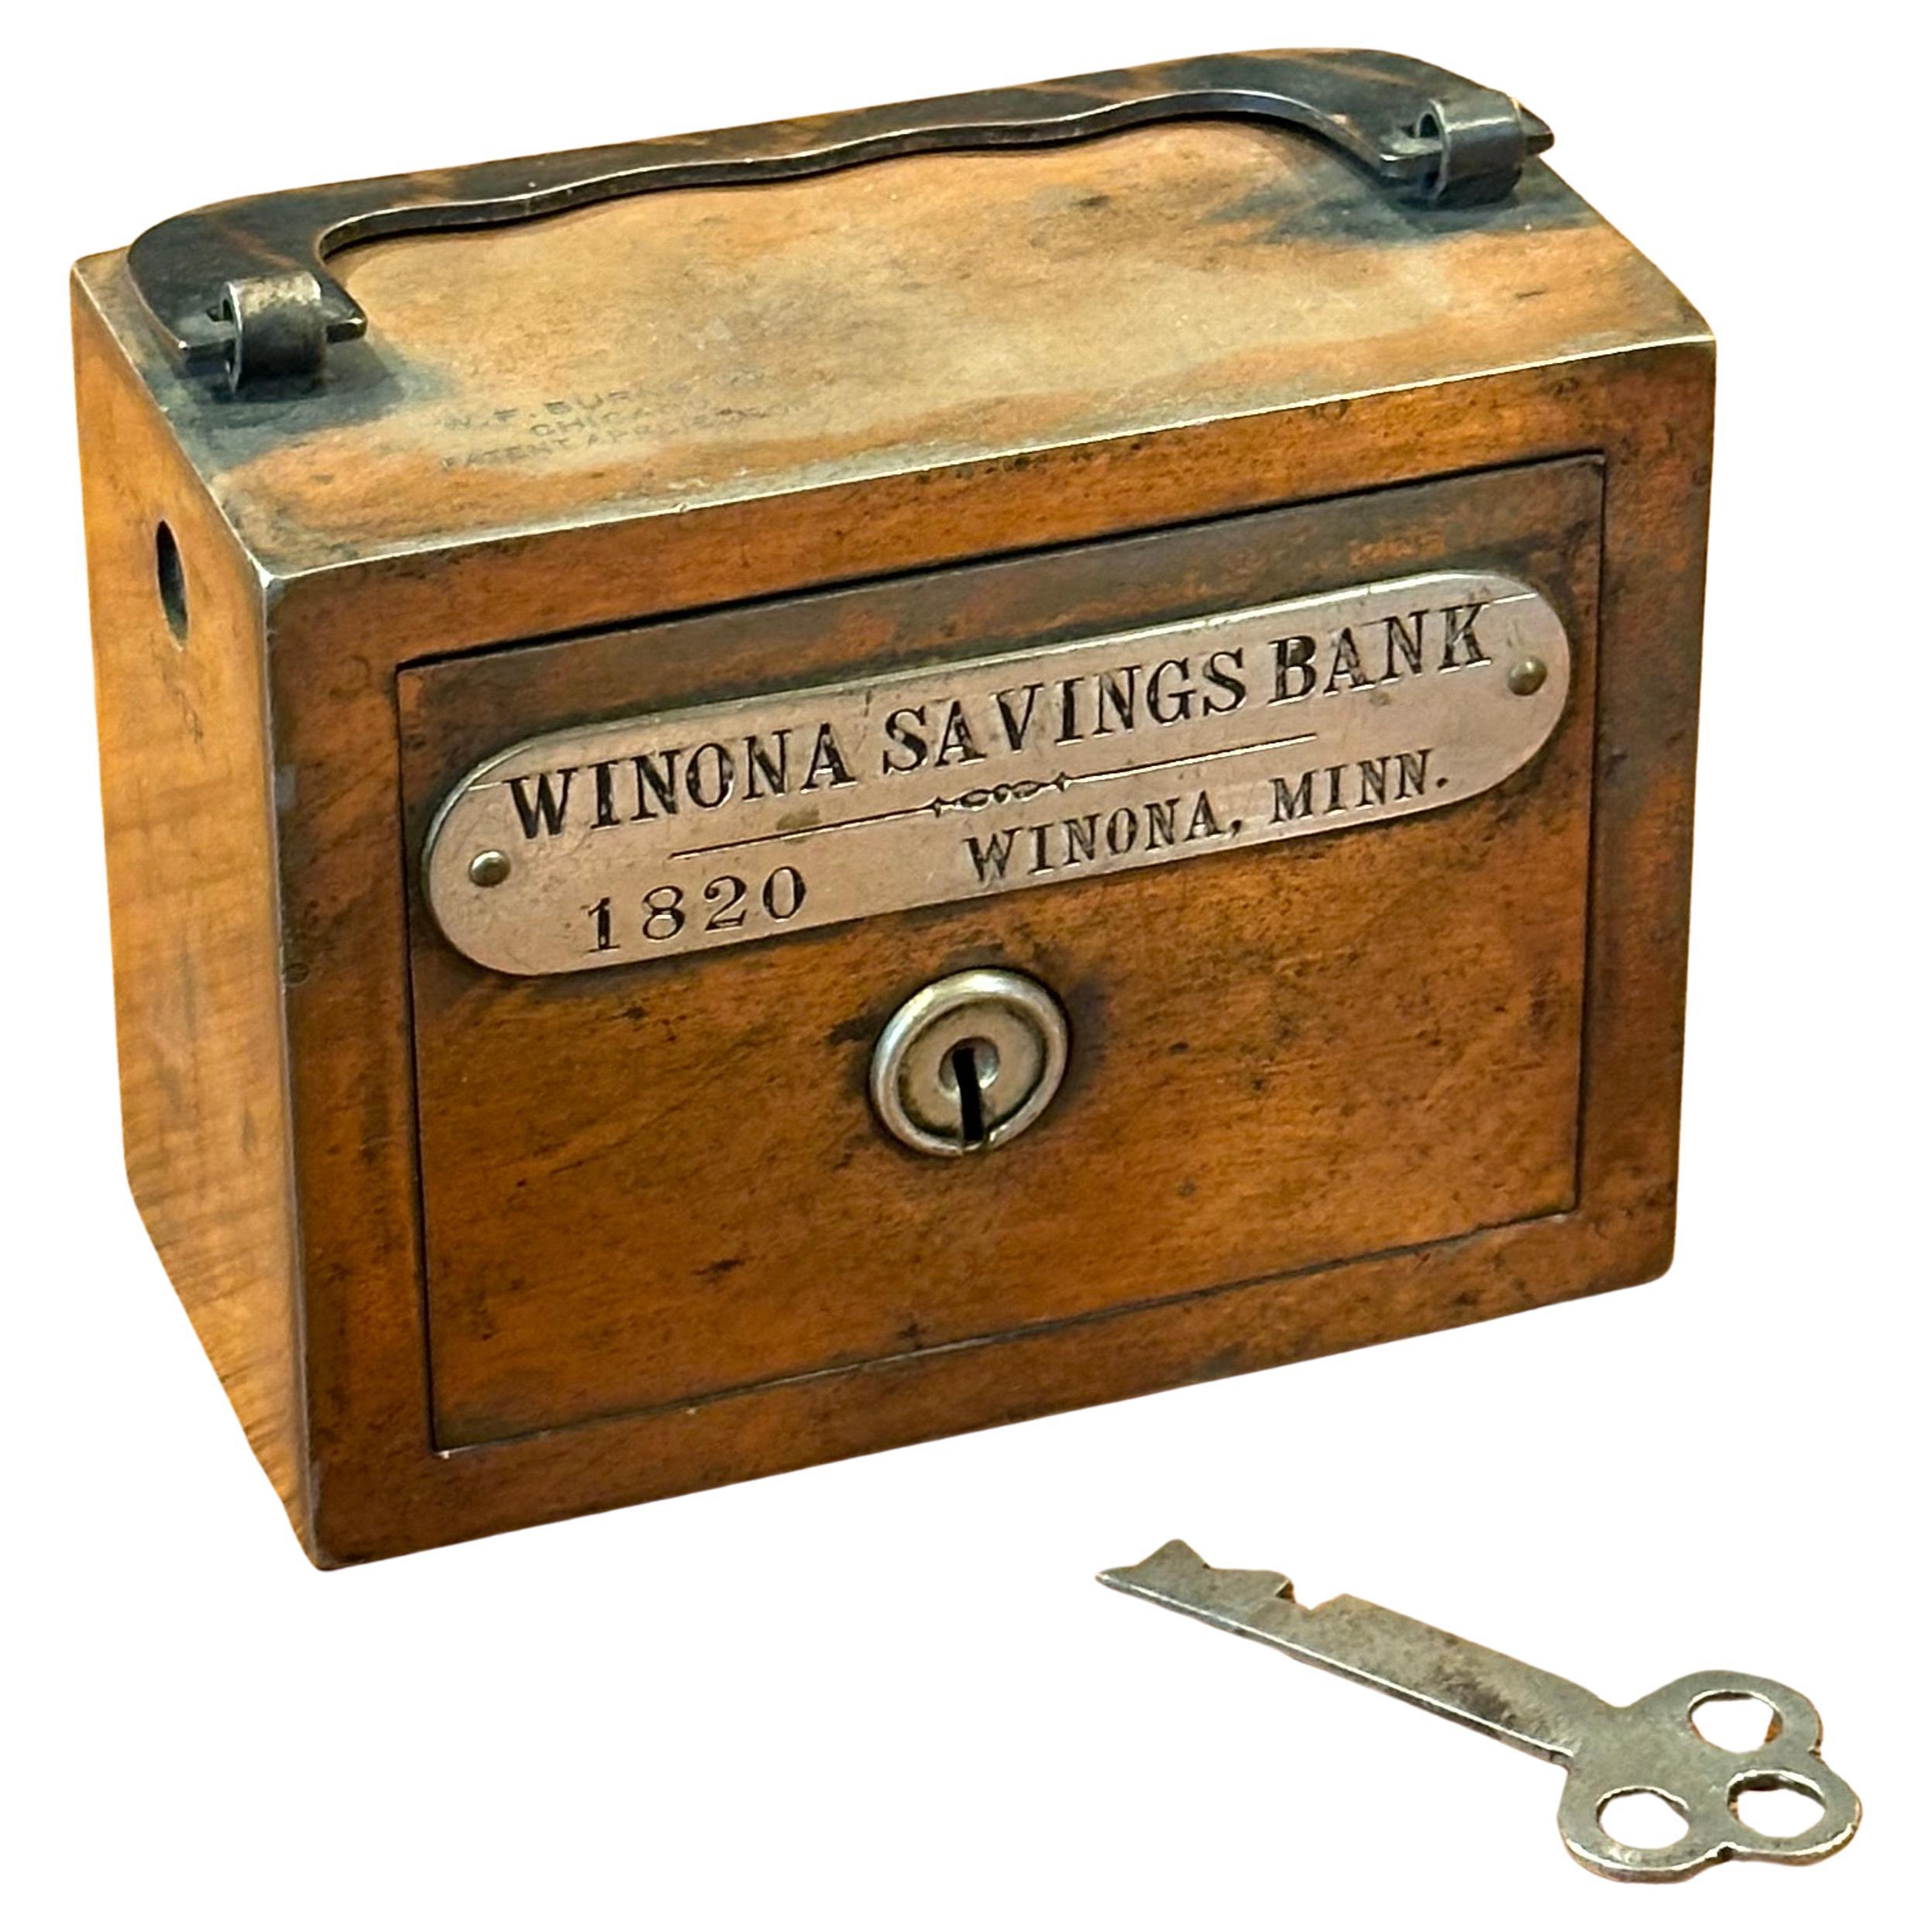 Vintage "Winona Savings Bank" of Minnesota Money Box by W.F. Burns & Co. For Sale